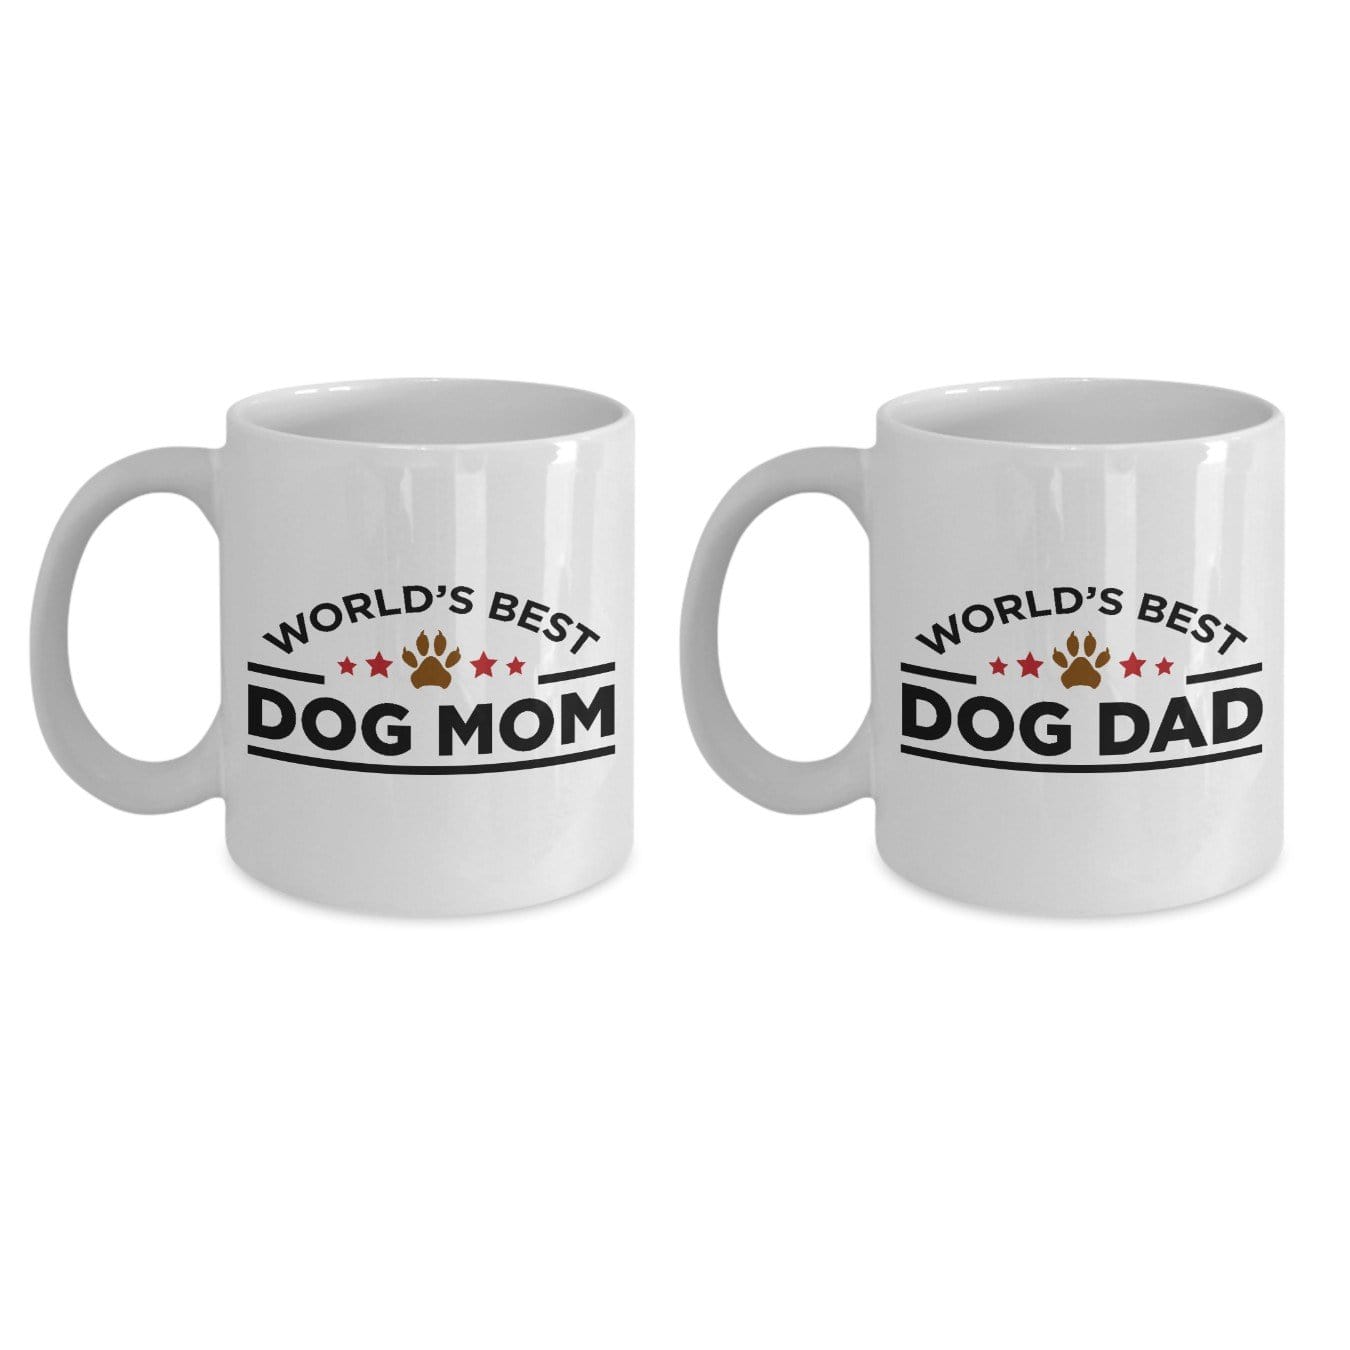 World's Best Dog Mom and Dad Ceramic Mugs